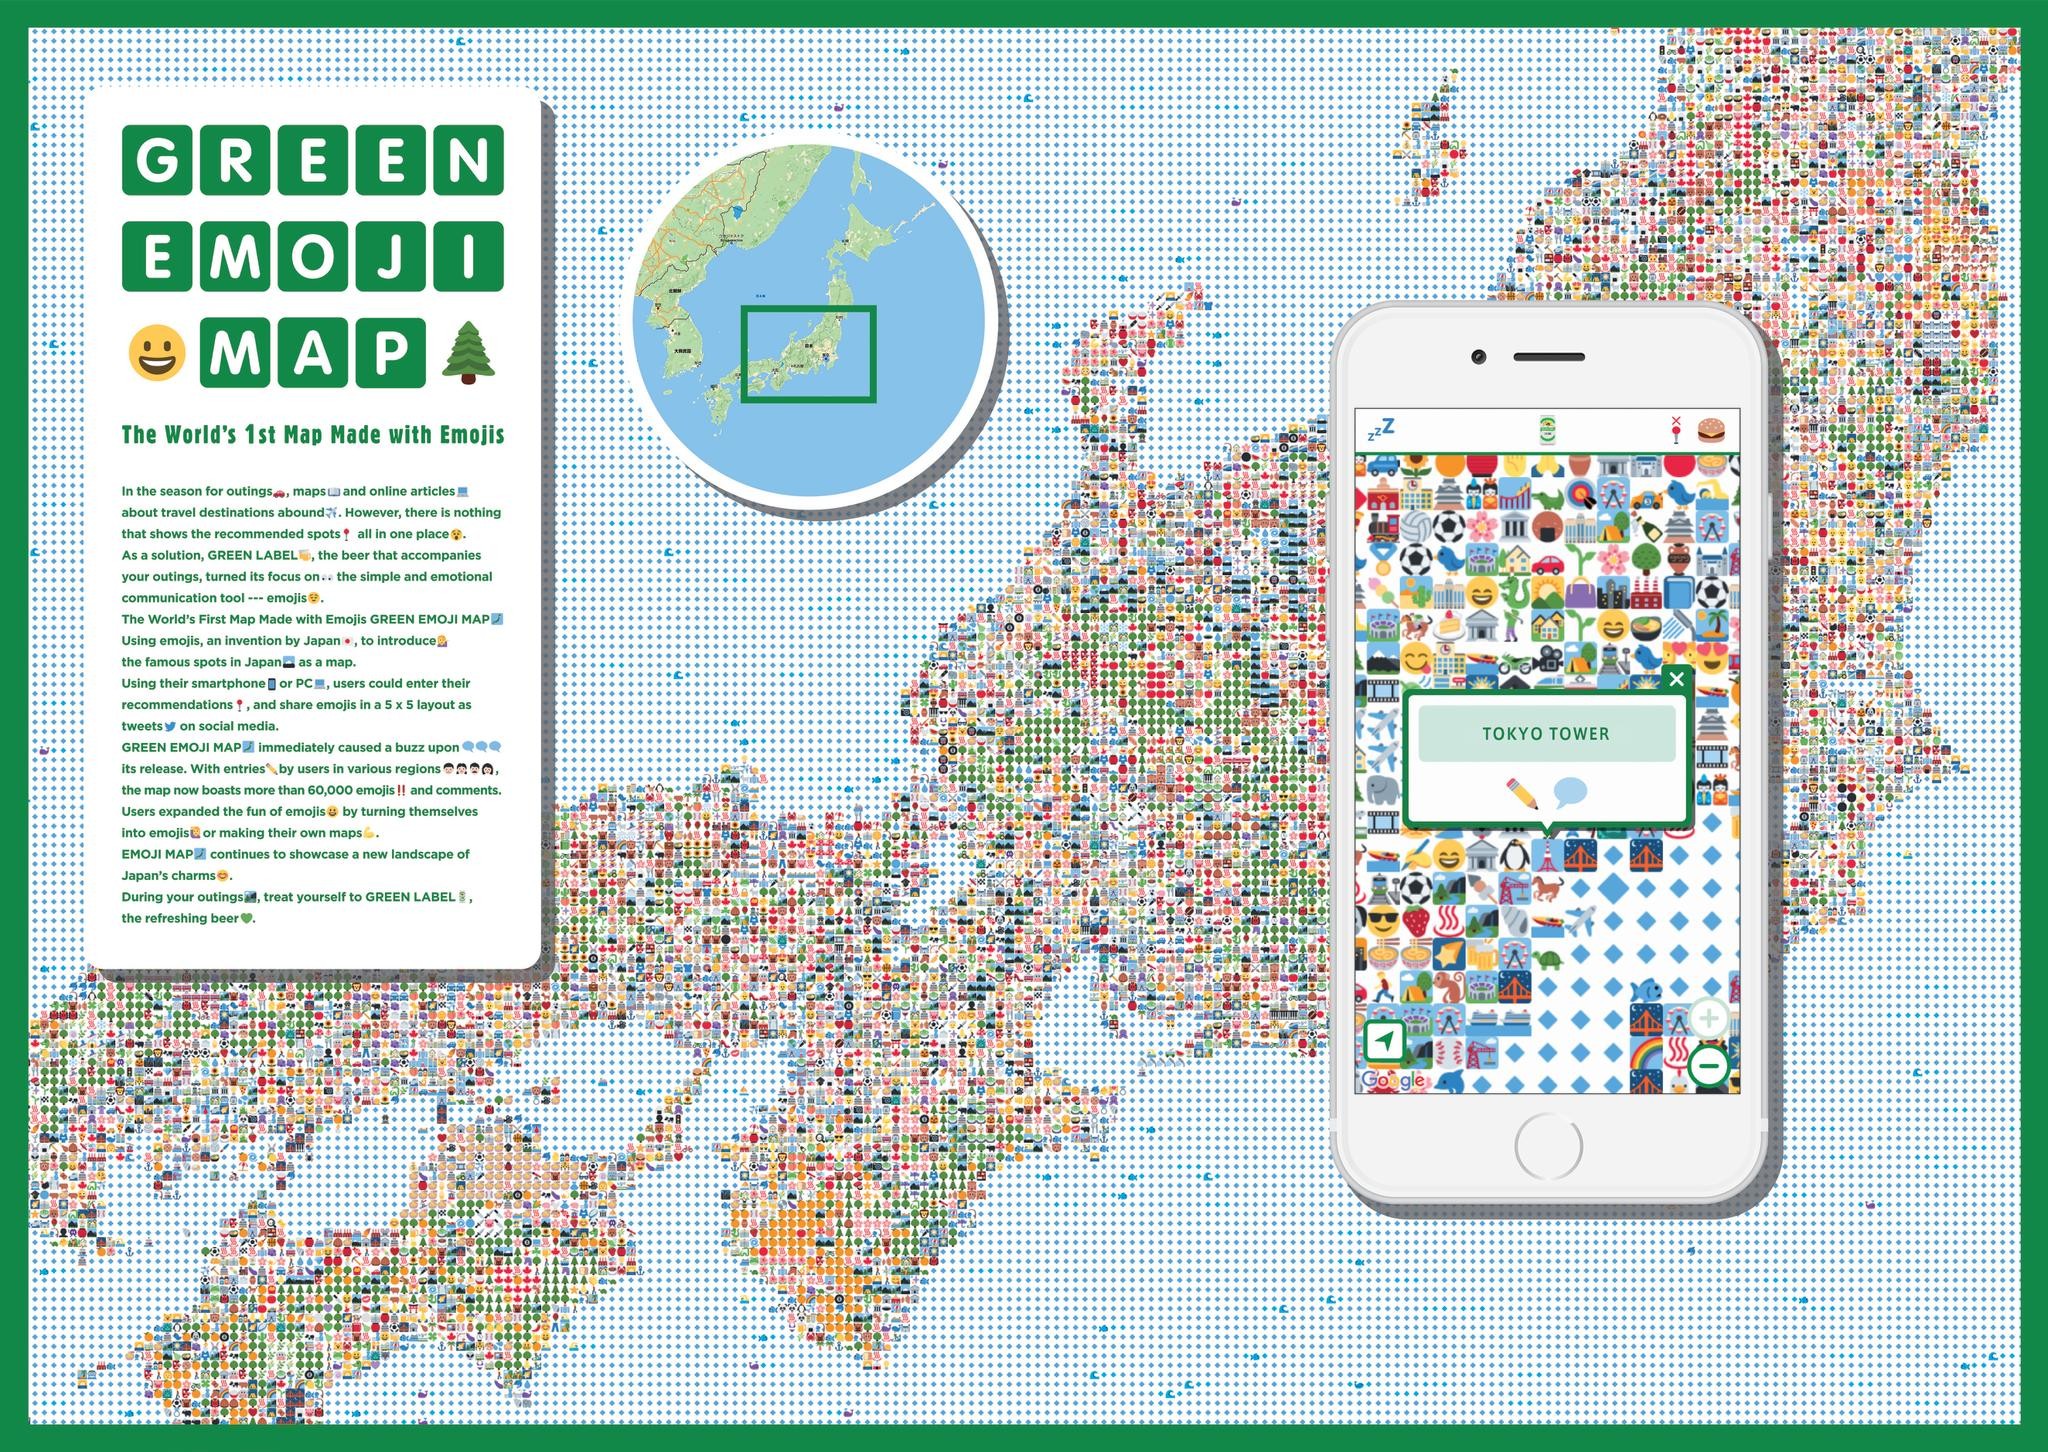 GREEN EMOJI MAP